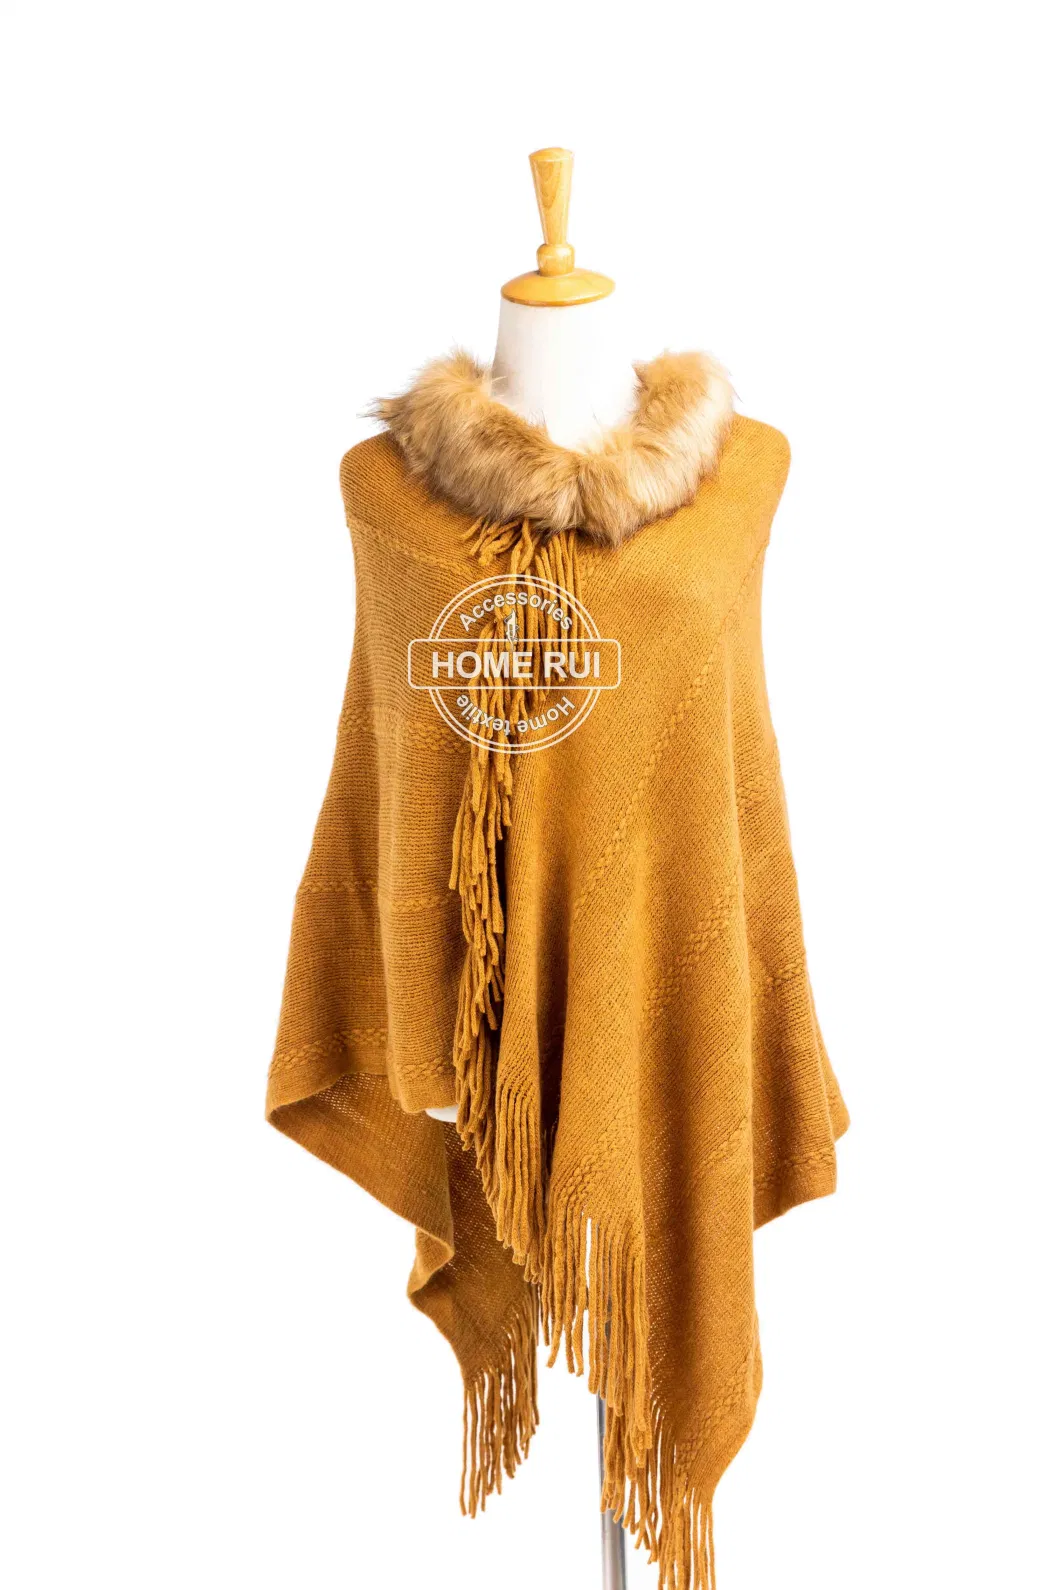 Home Rui Manufacturer Outerwear Spring Autumn Woman Warmth Wraps Acrylic Fake Fur Faux Collar Pullover Oversize Fringe Wraps Ruffled Shawl Turtleneck Cloak